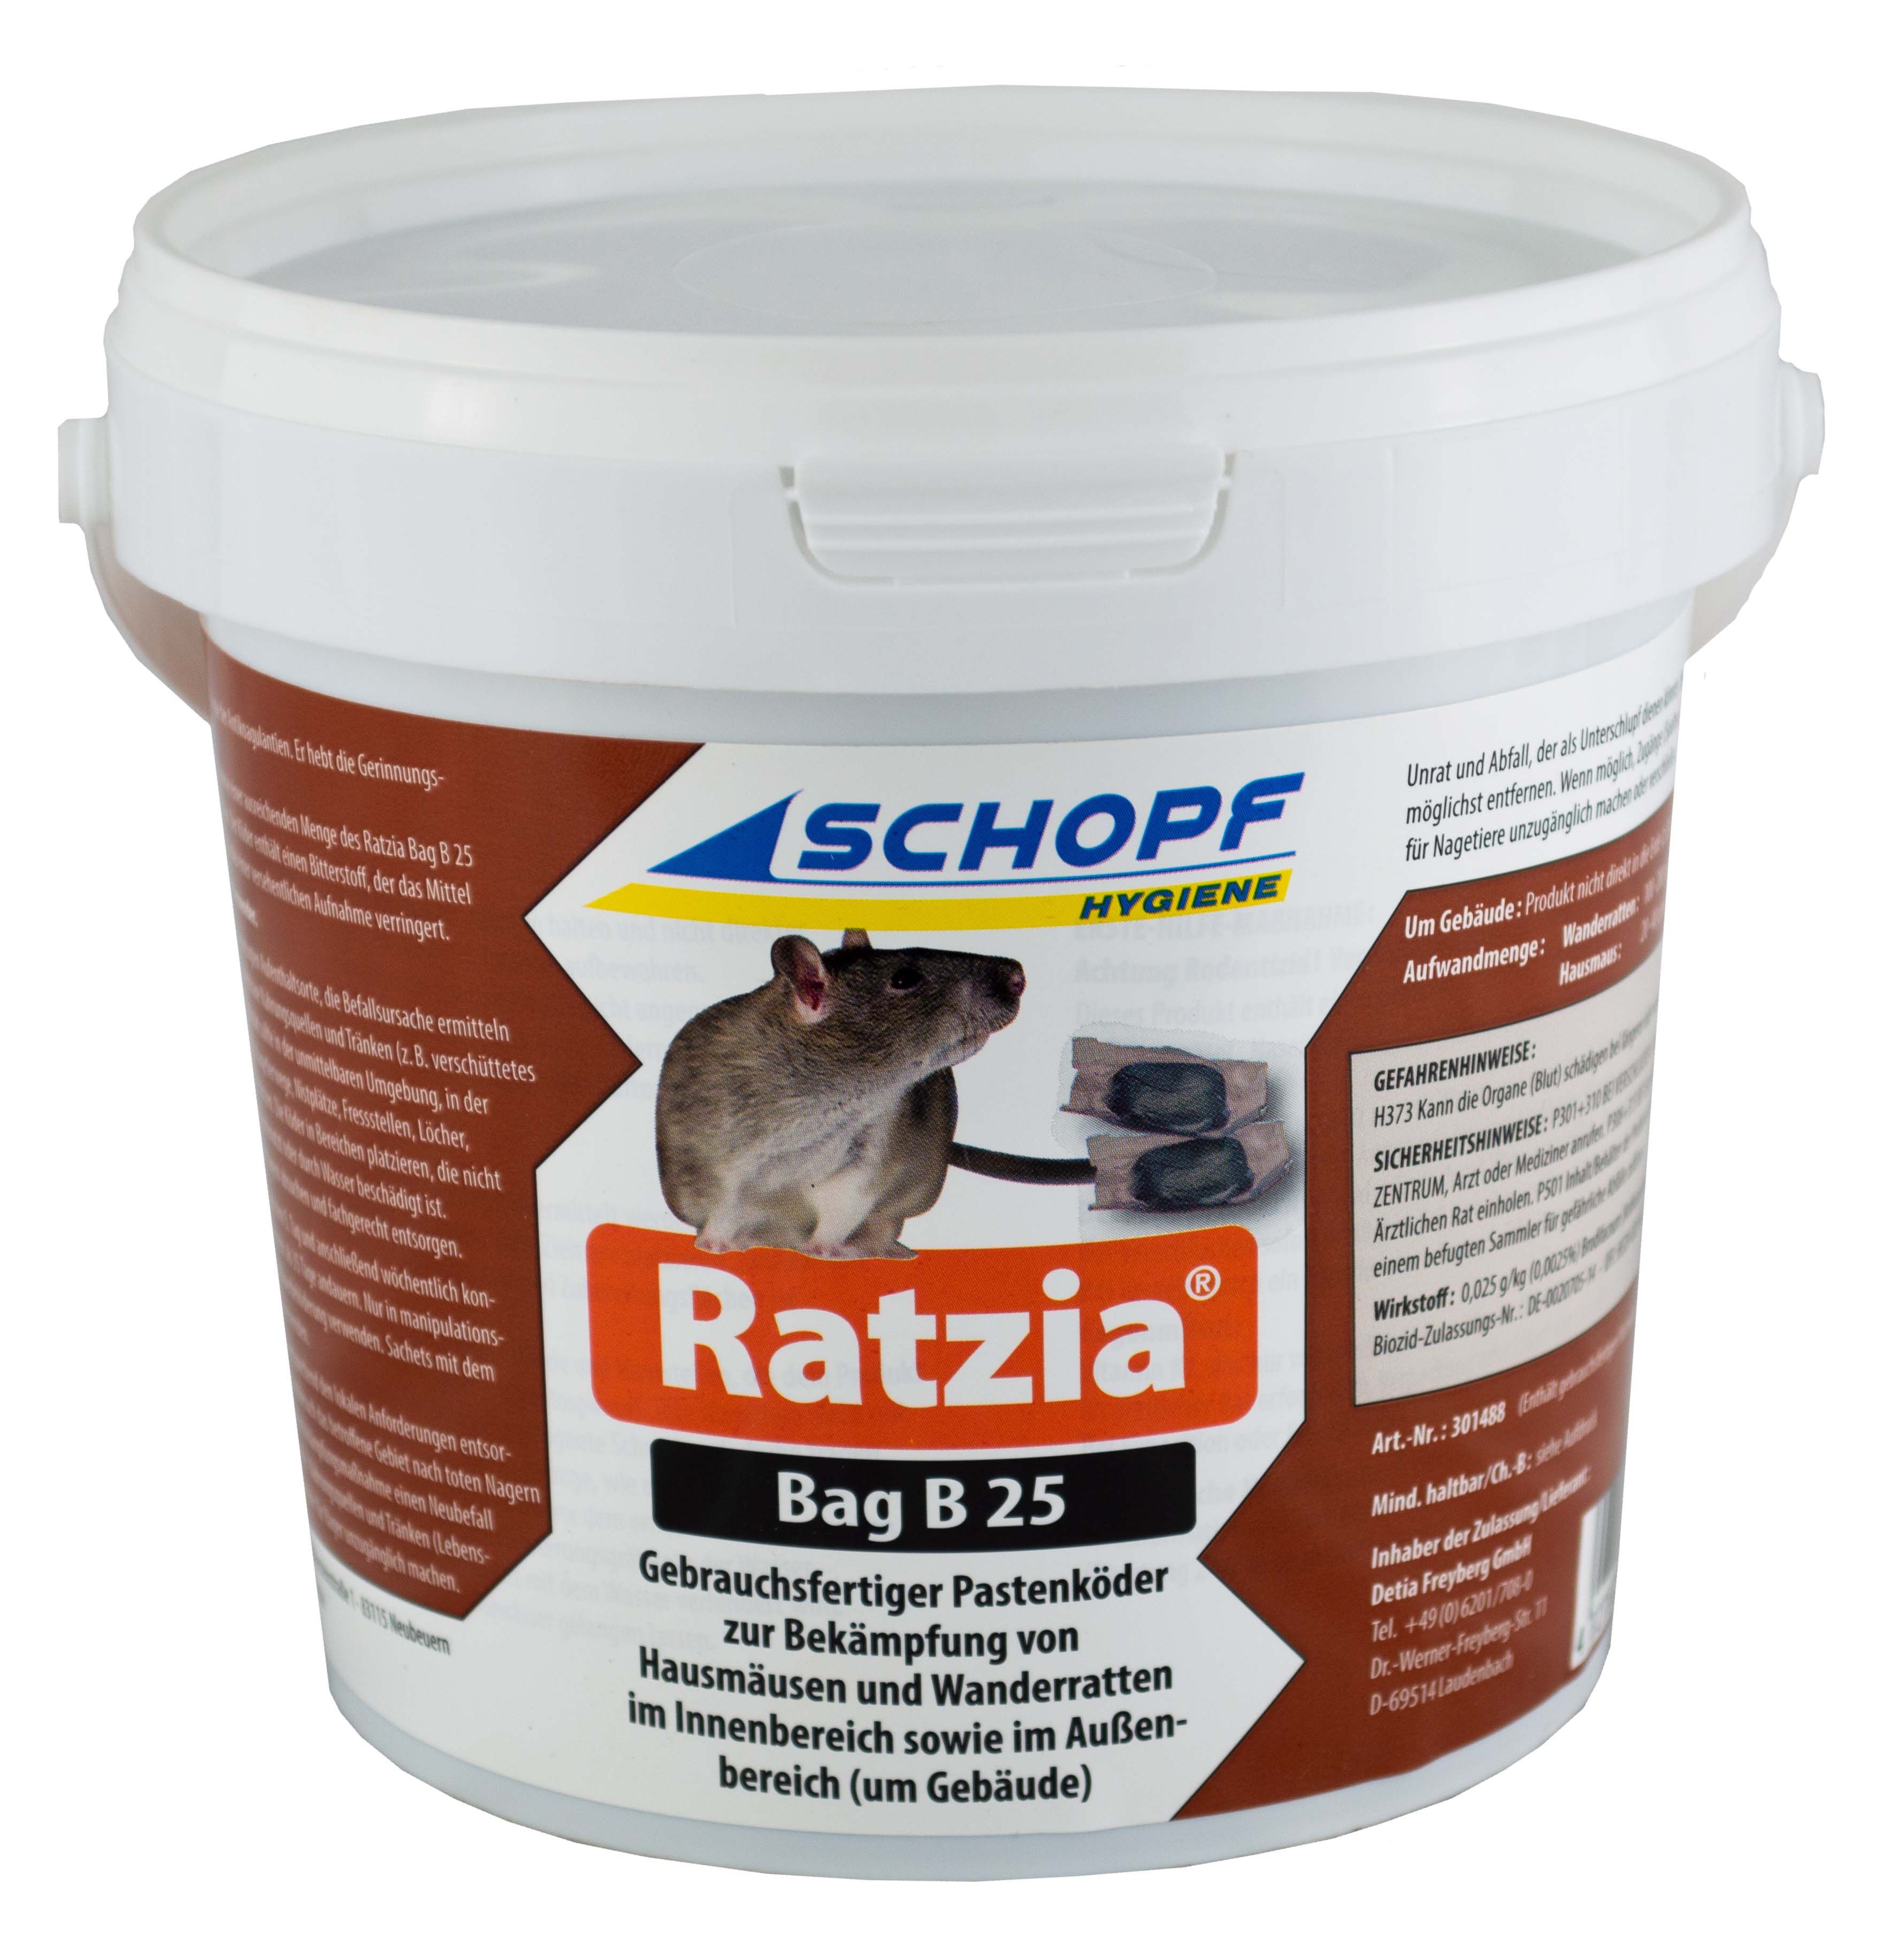 Ratzia Bag B 25 Gebrauchsfertiger Pastenköder Schopf 500 g